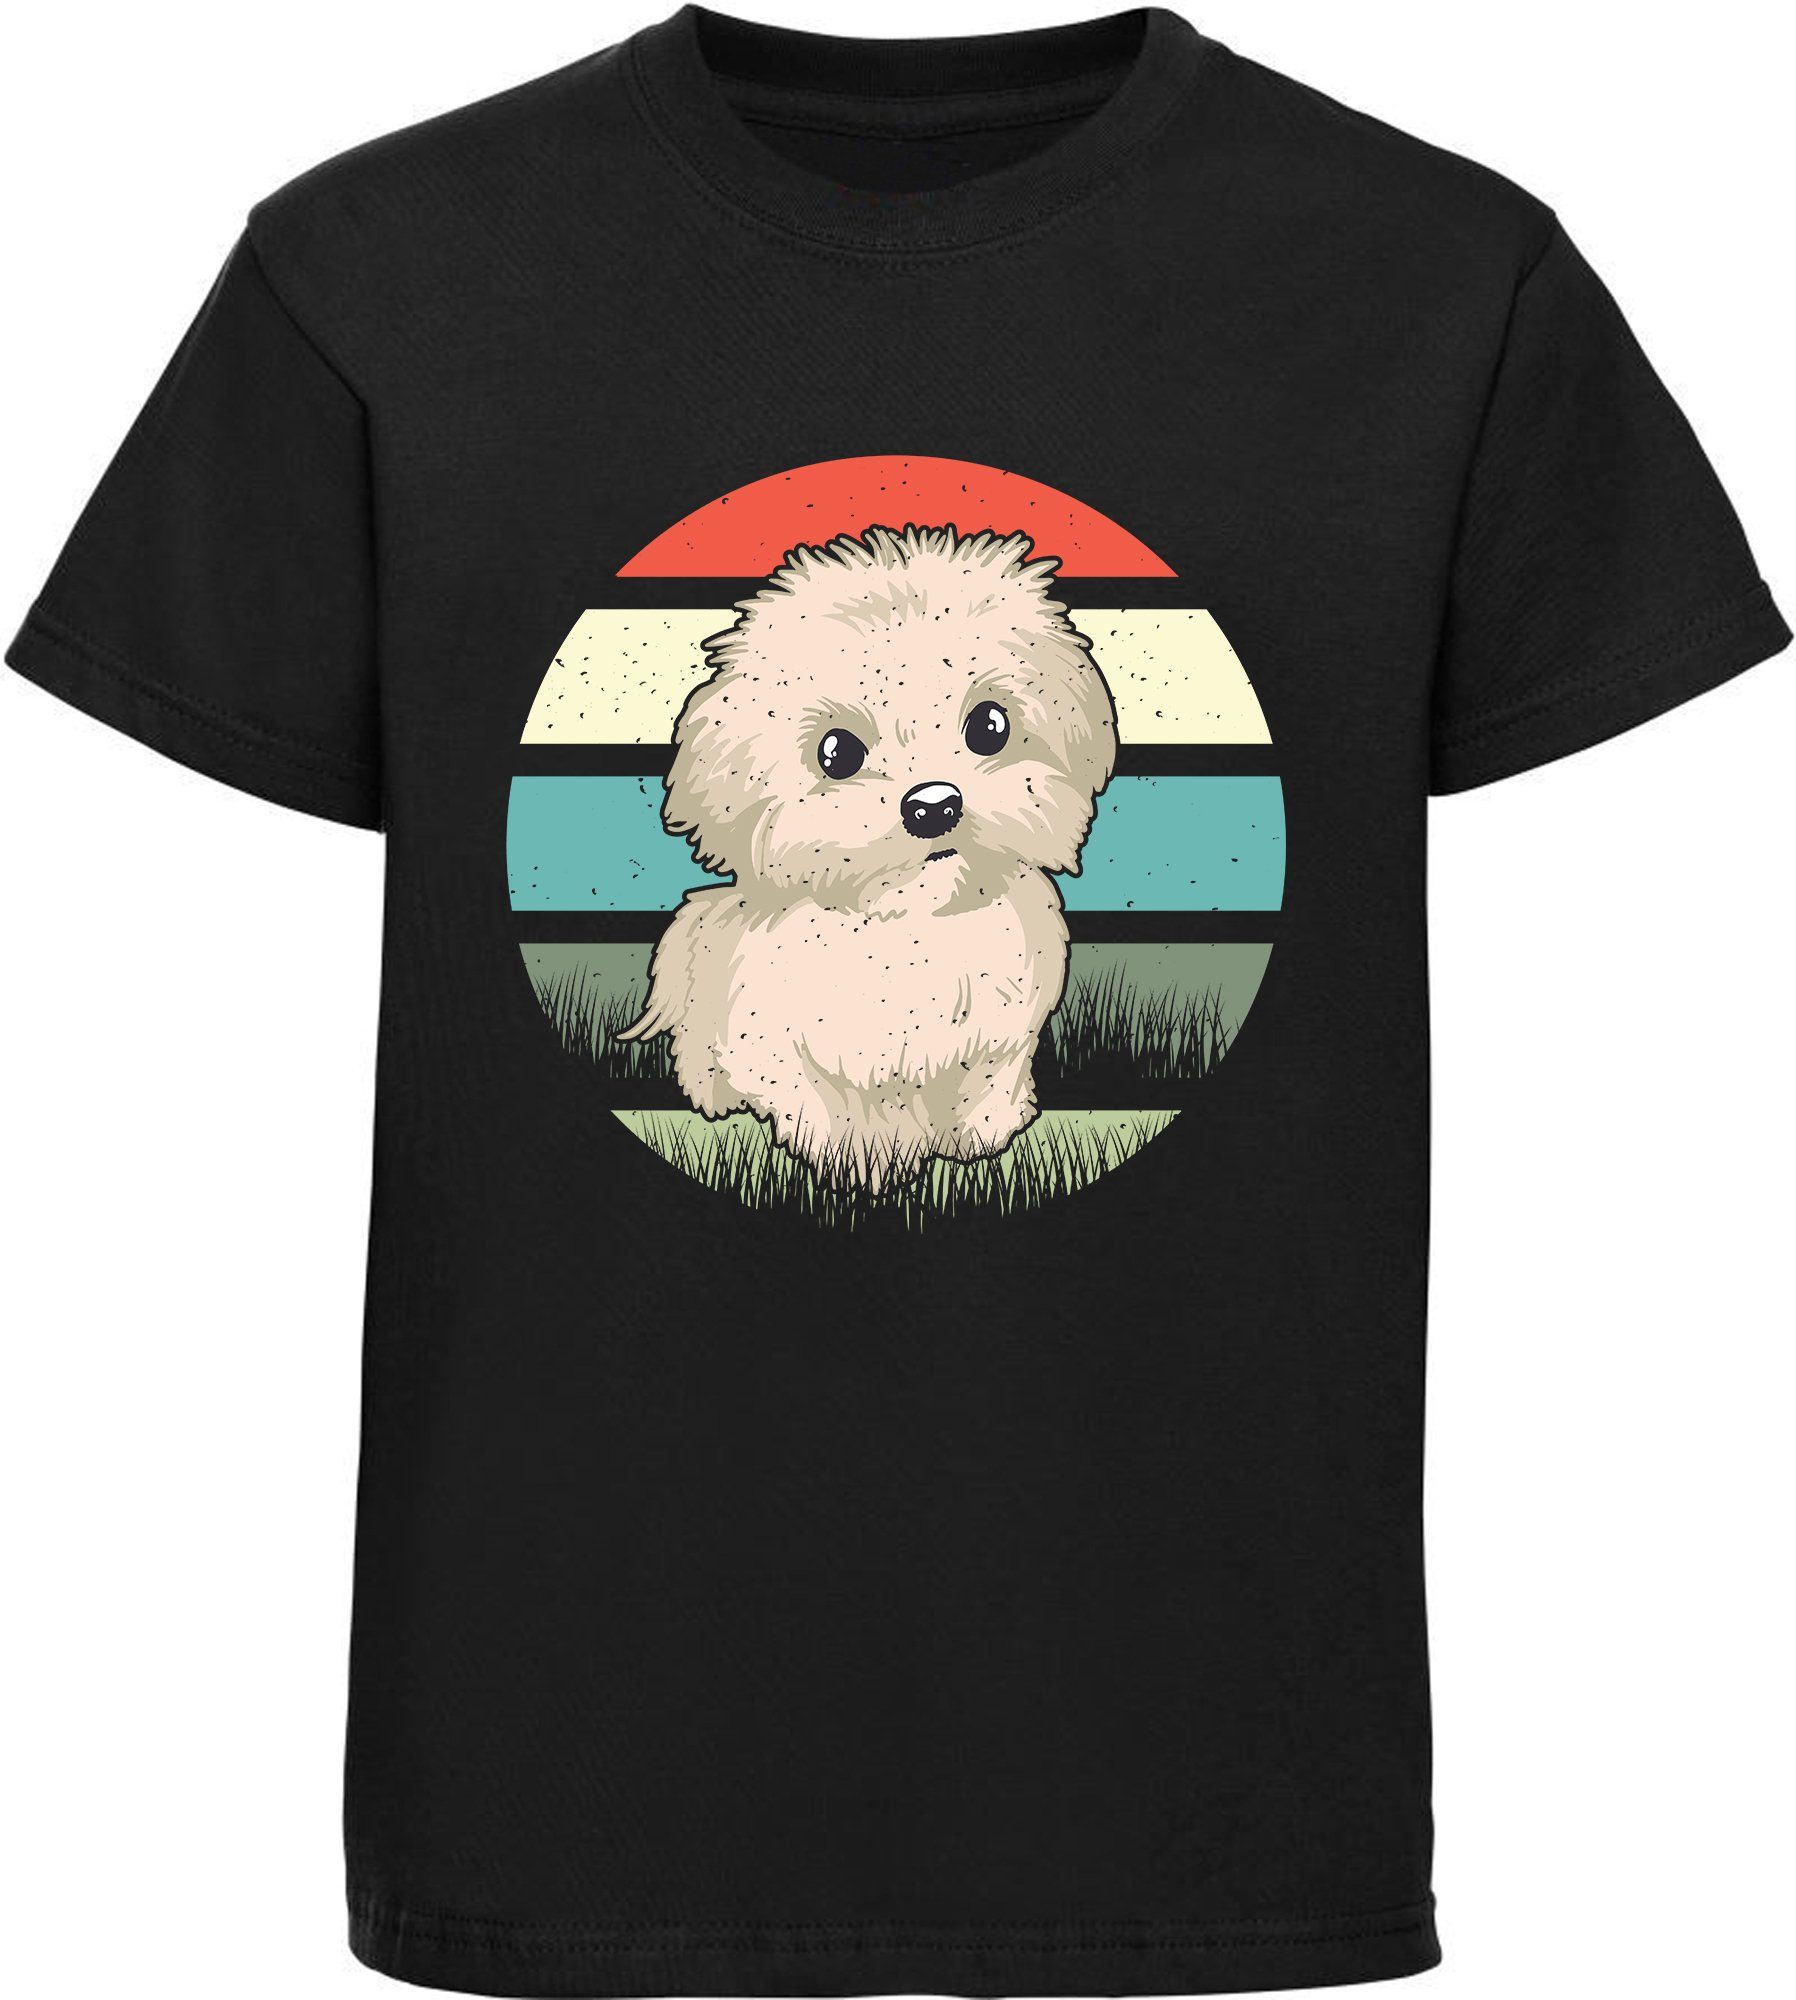 MyDesign24 Print-Shirt Kinder Hunde T-Shirt bedruckt - Retro Malteser Welpen Baumwollshirt mit Aufdruck, i242 schwarz | T-Shirts